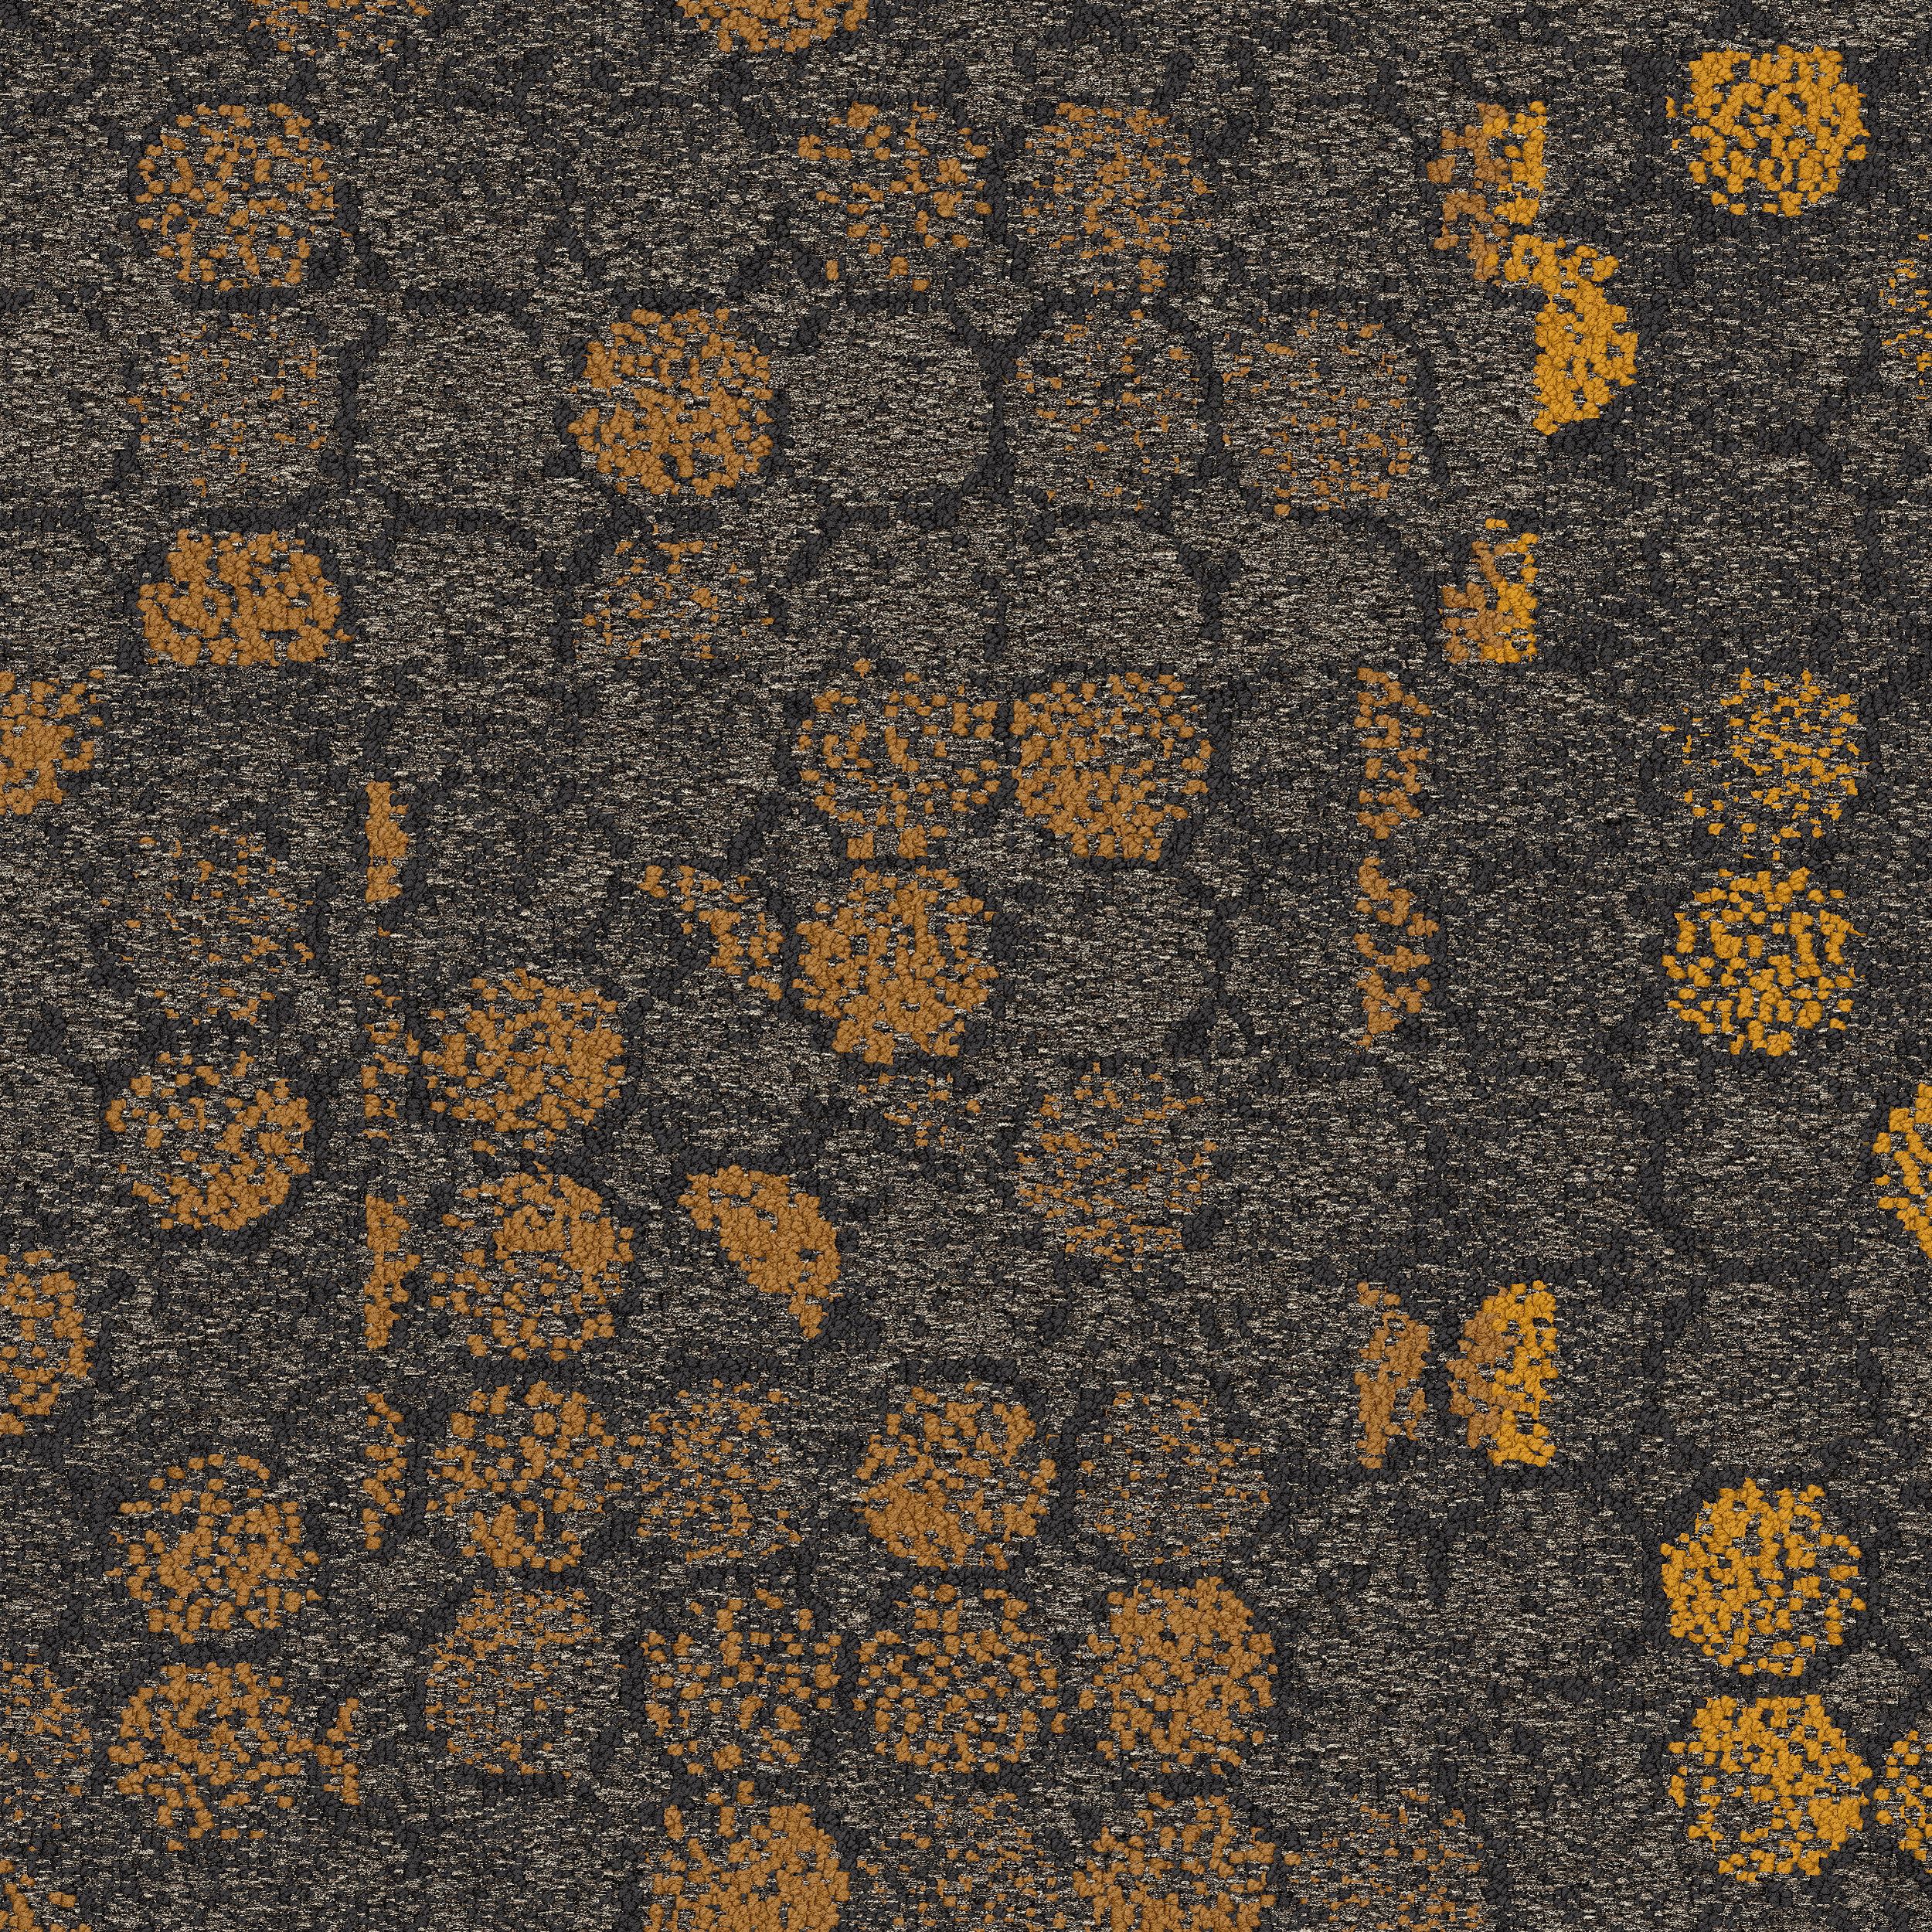 Broome Street Carpet Tile In Yellow Glass Bildnummer 2